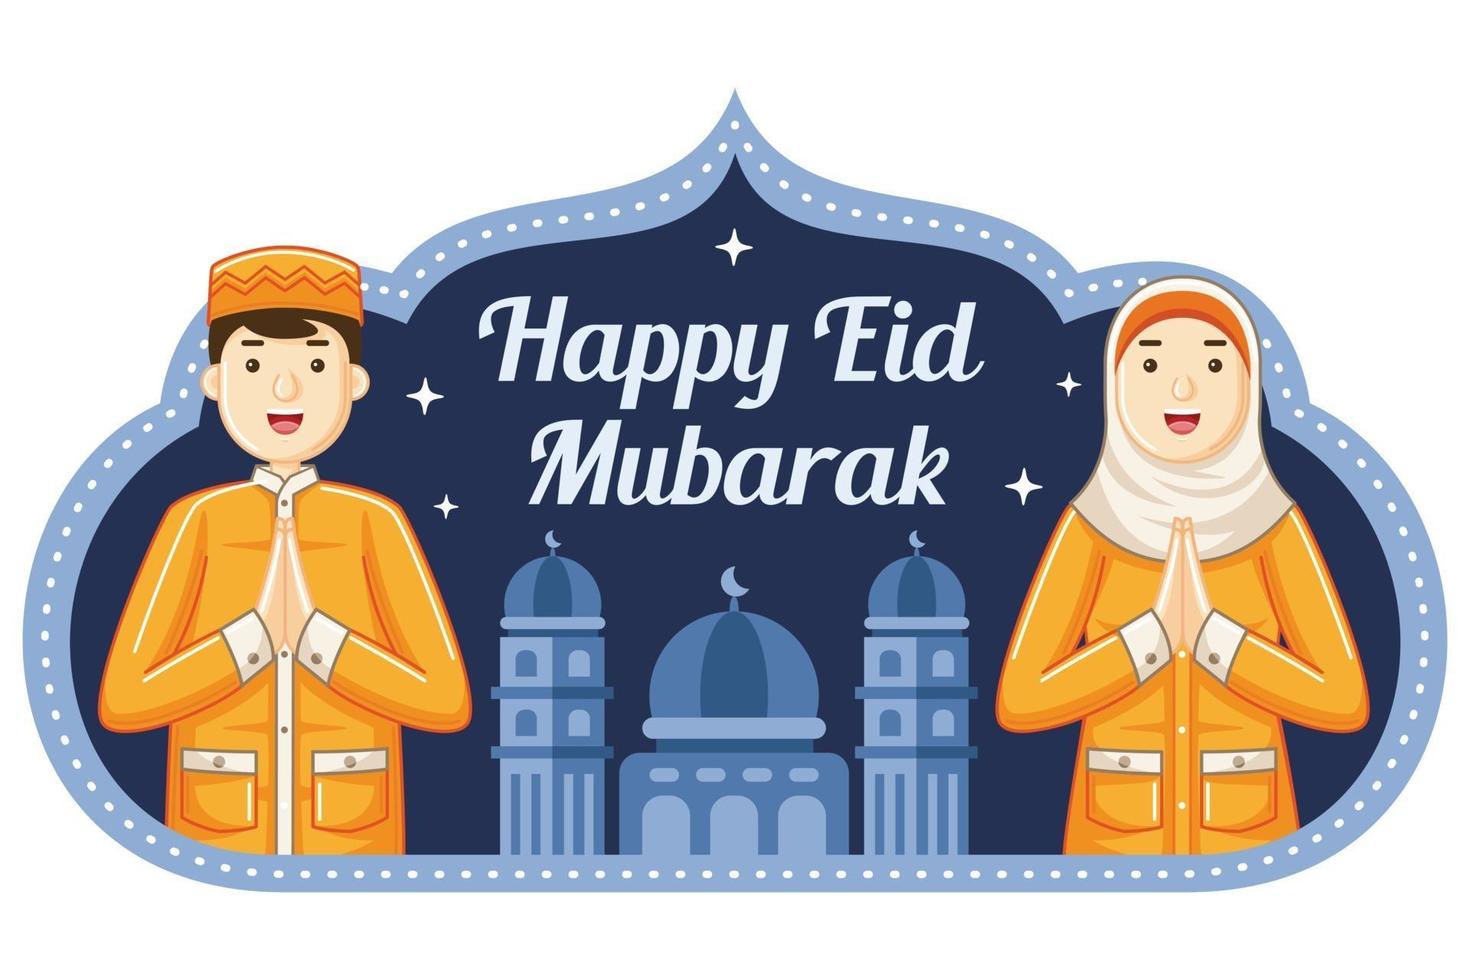 Happy Eid mubarak greeting with smiling people vector